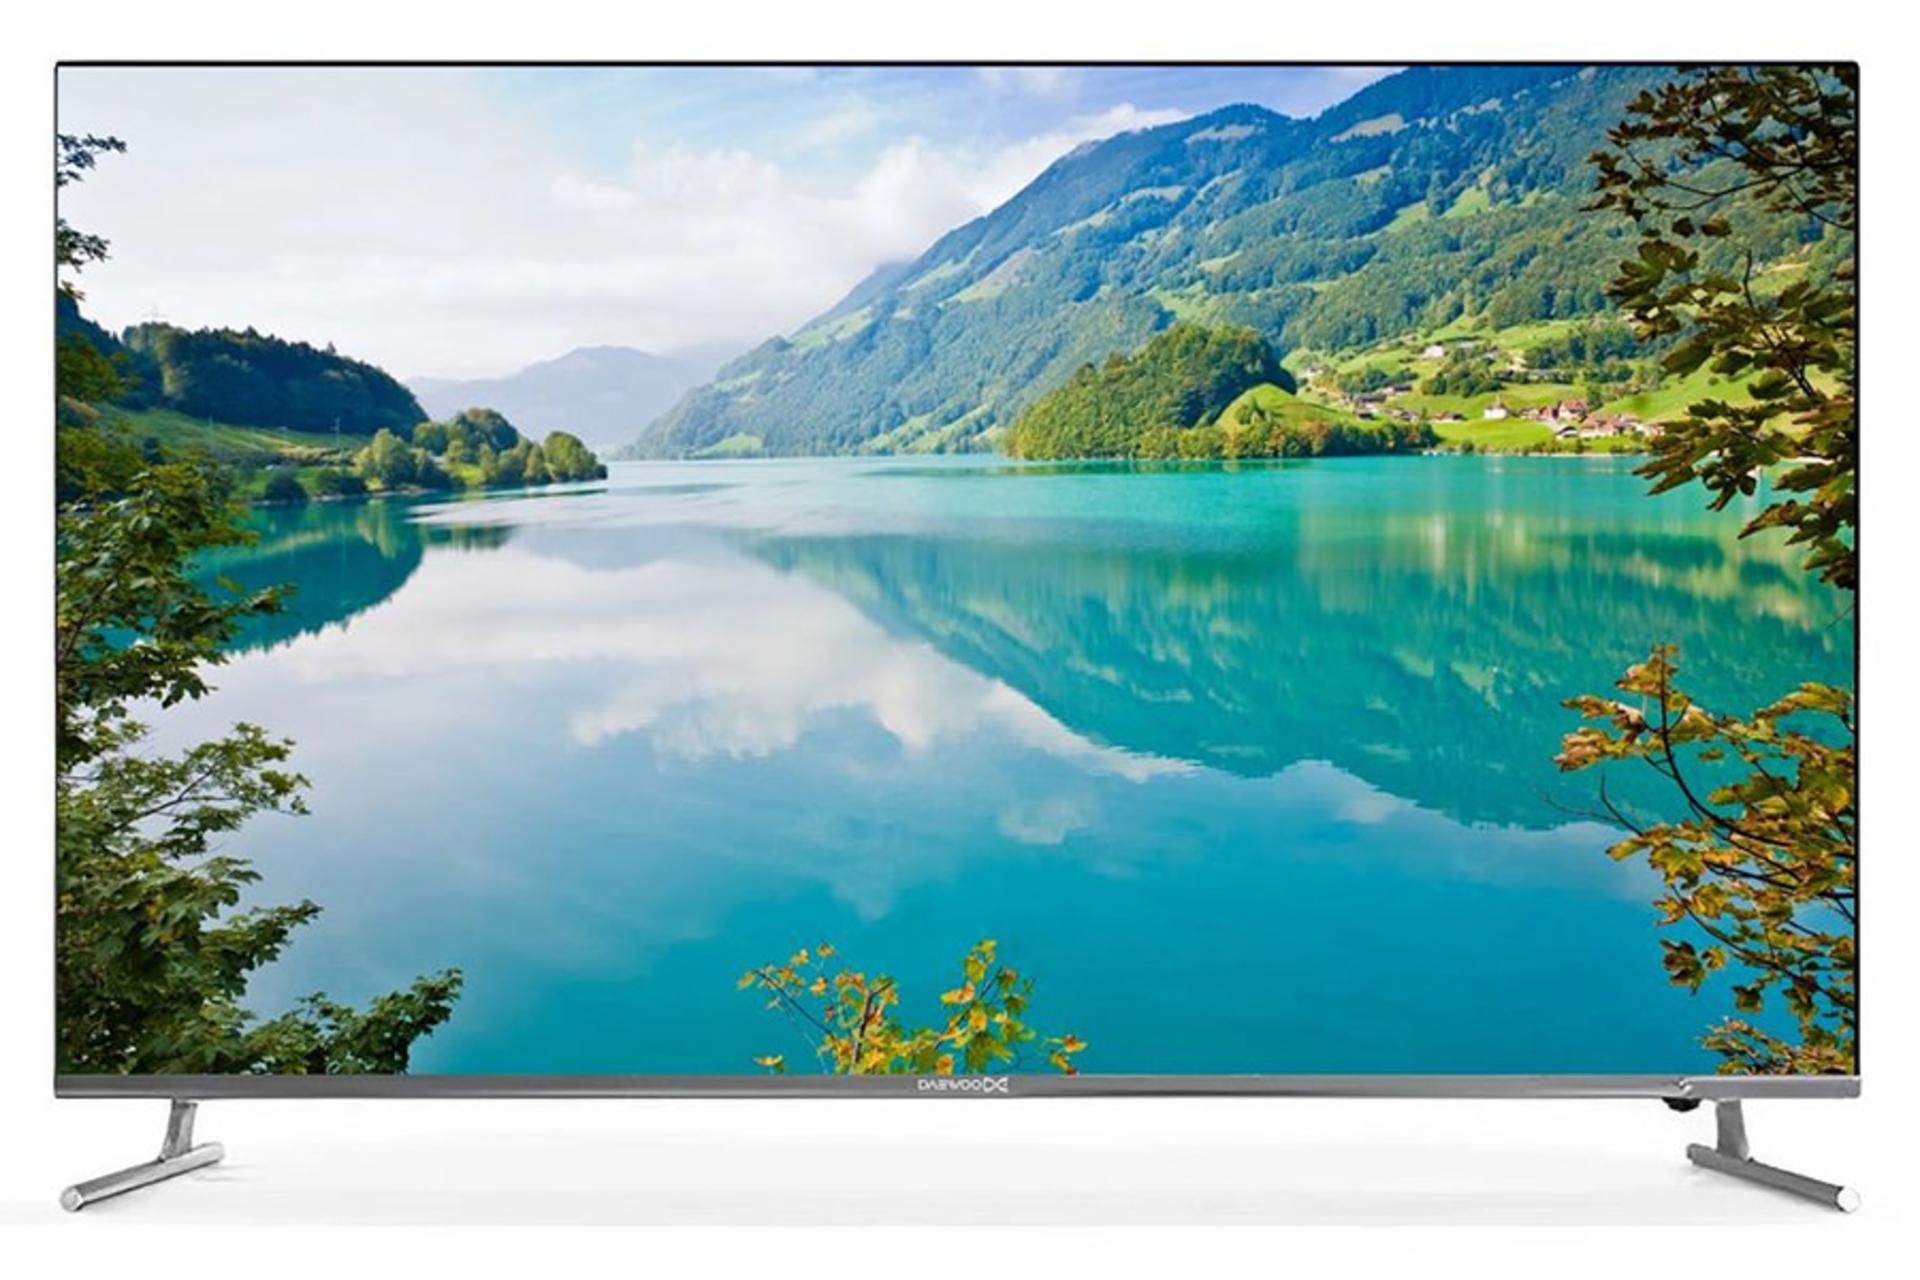 قیمت تلویزیون دوو S6600EUM مدل 50 اینچ + مشخصات